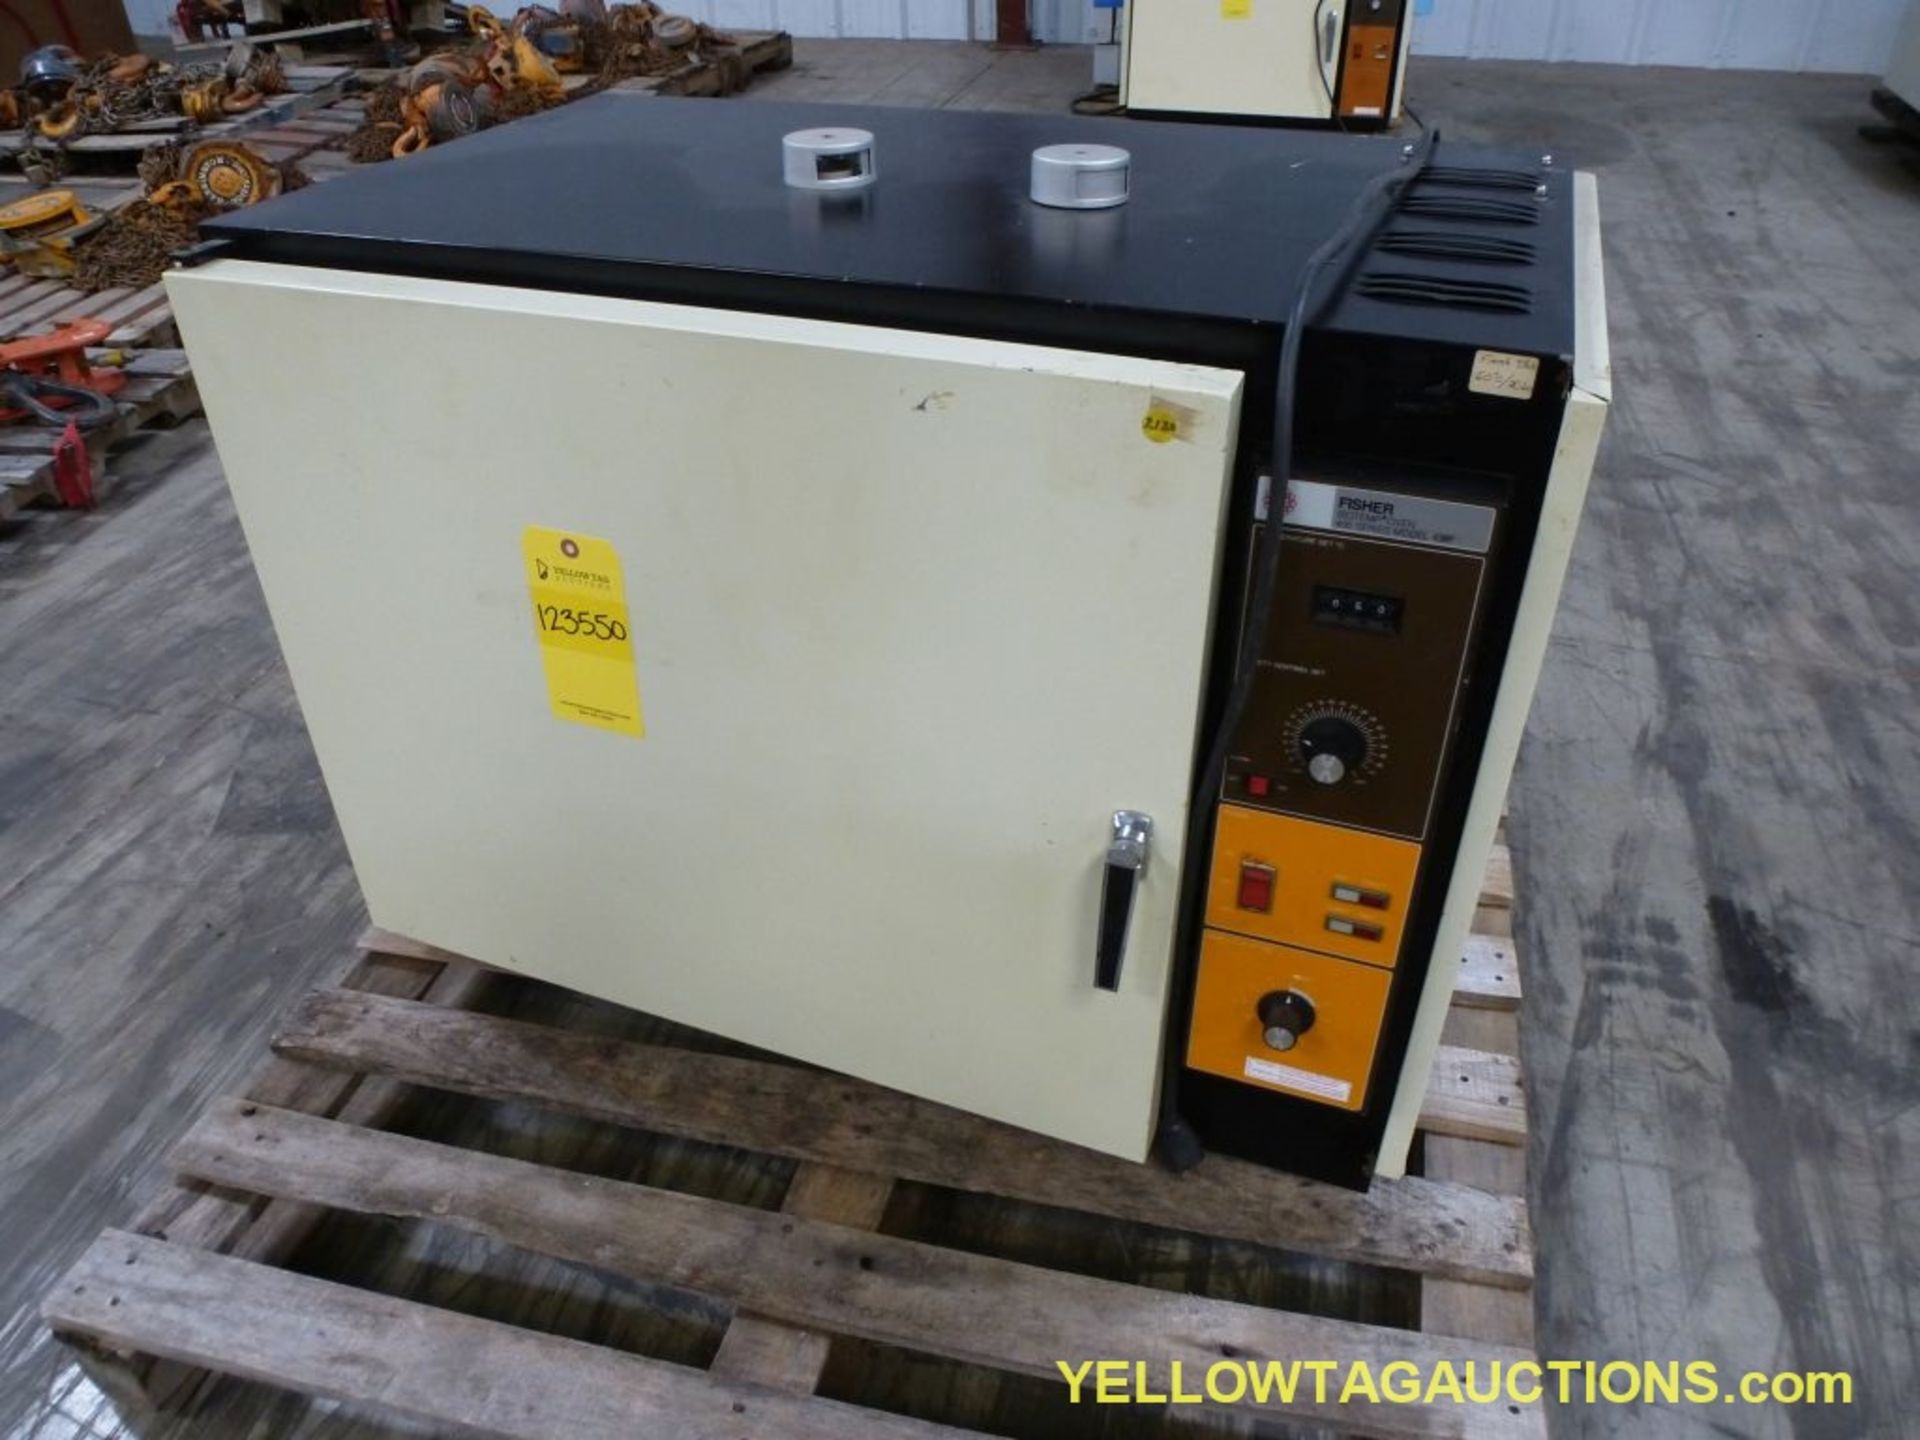 Fischer 400 Series Isotemp Oven|Model No. 438F104 - 572 Deg. F18" x 20" x 18"D230VLocation: YTA